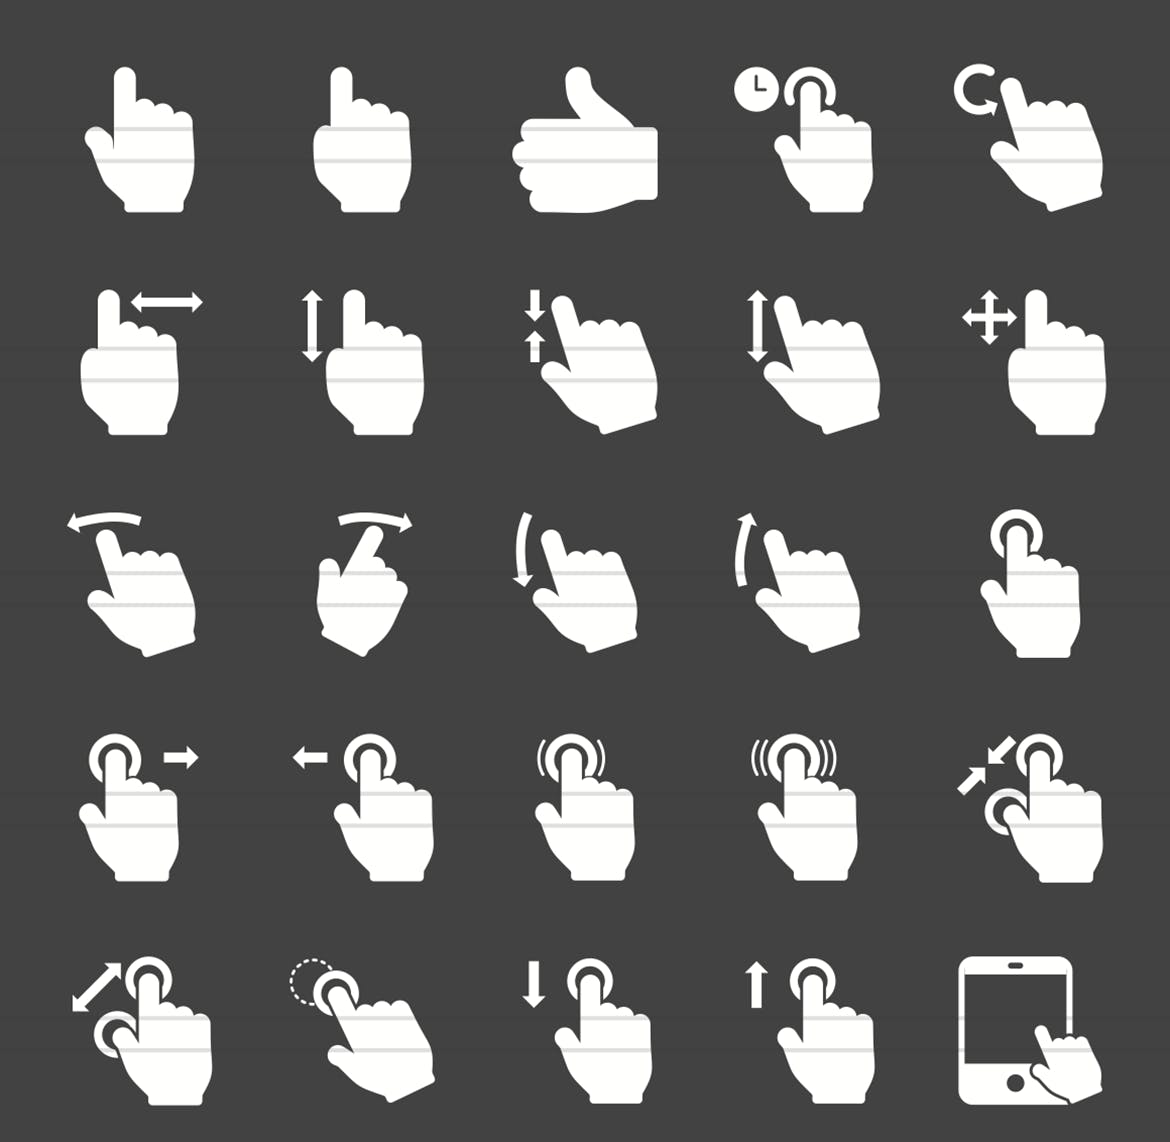 50枚触屏手势动作图标素材 50 Touch Gestures Glyph Inverted Icons插图(1)